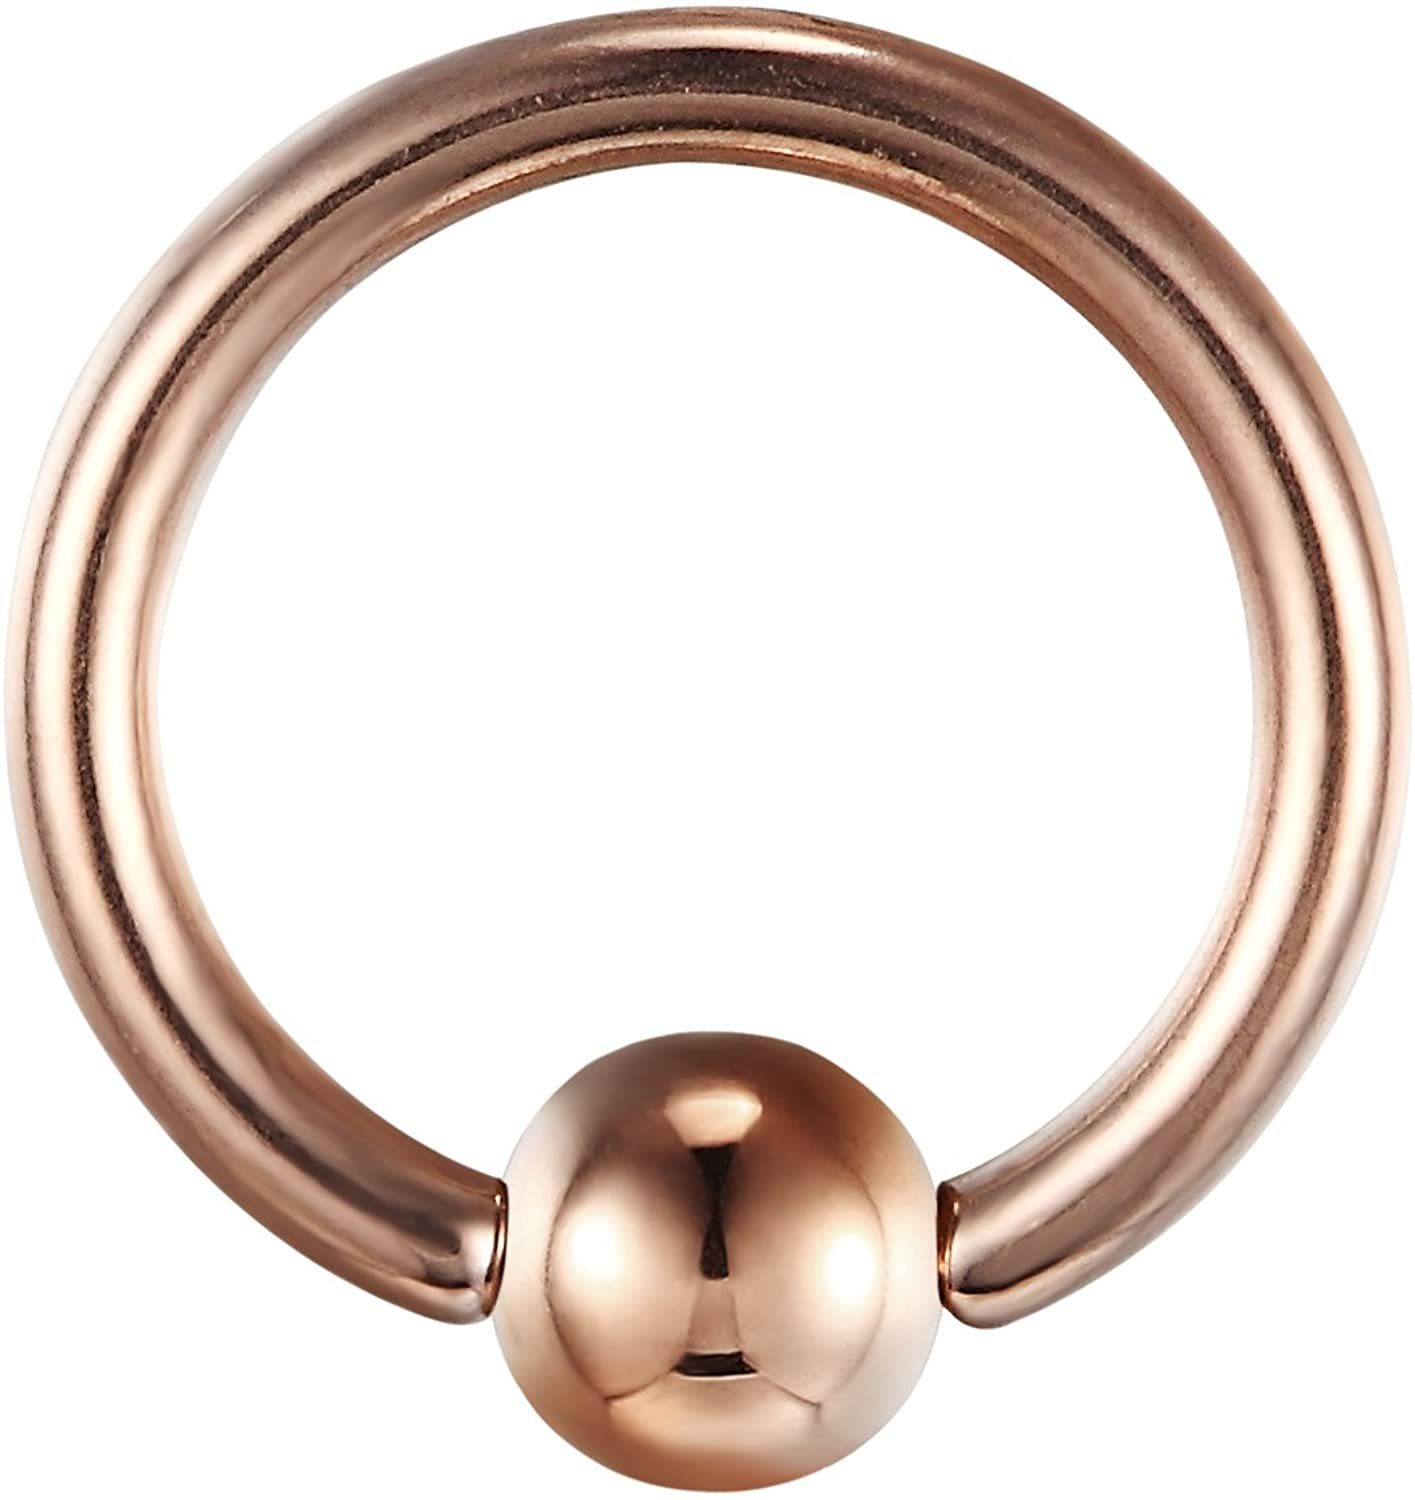 Karisma Piercing-Set Karisma Titan Roségold G23 BCR Klemmring Nasen Septum Ohrpiercing Ball Closure Ring Stärke 1,2mm - 6.0 Millimeter